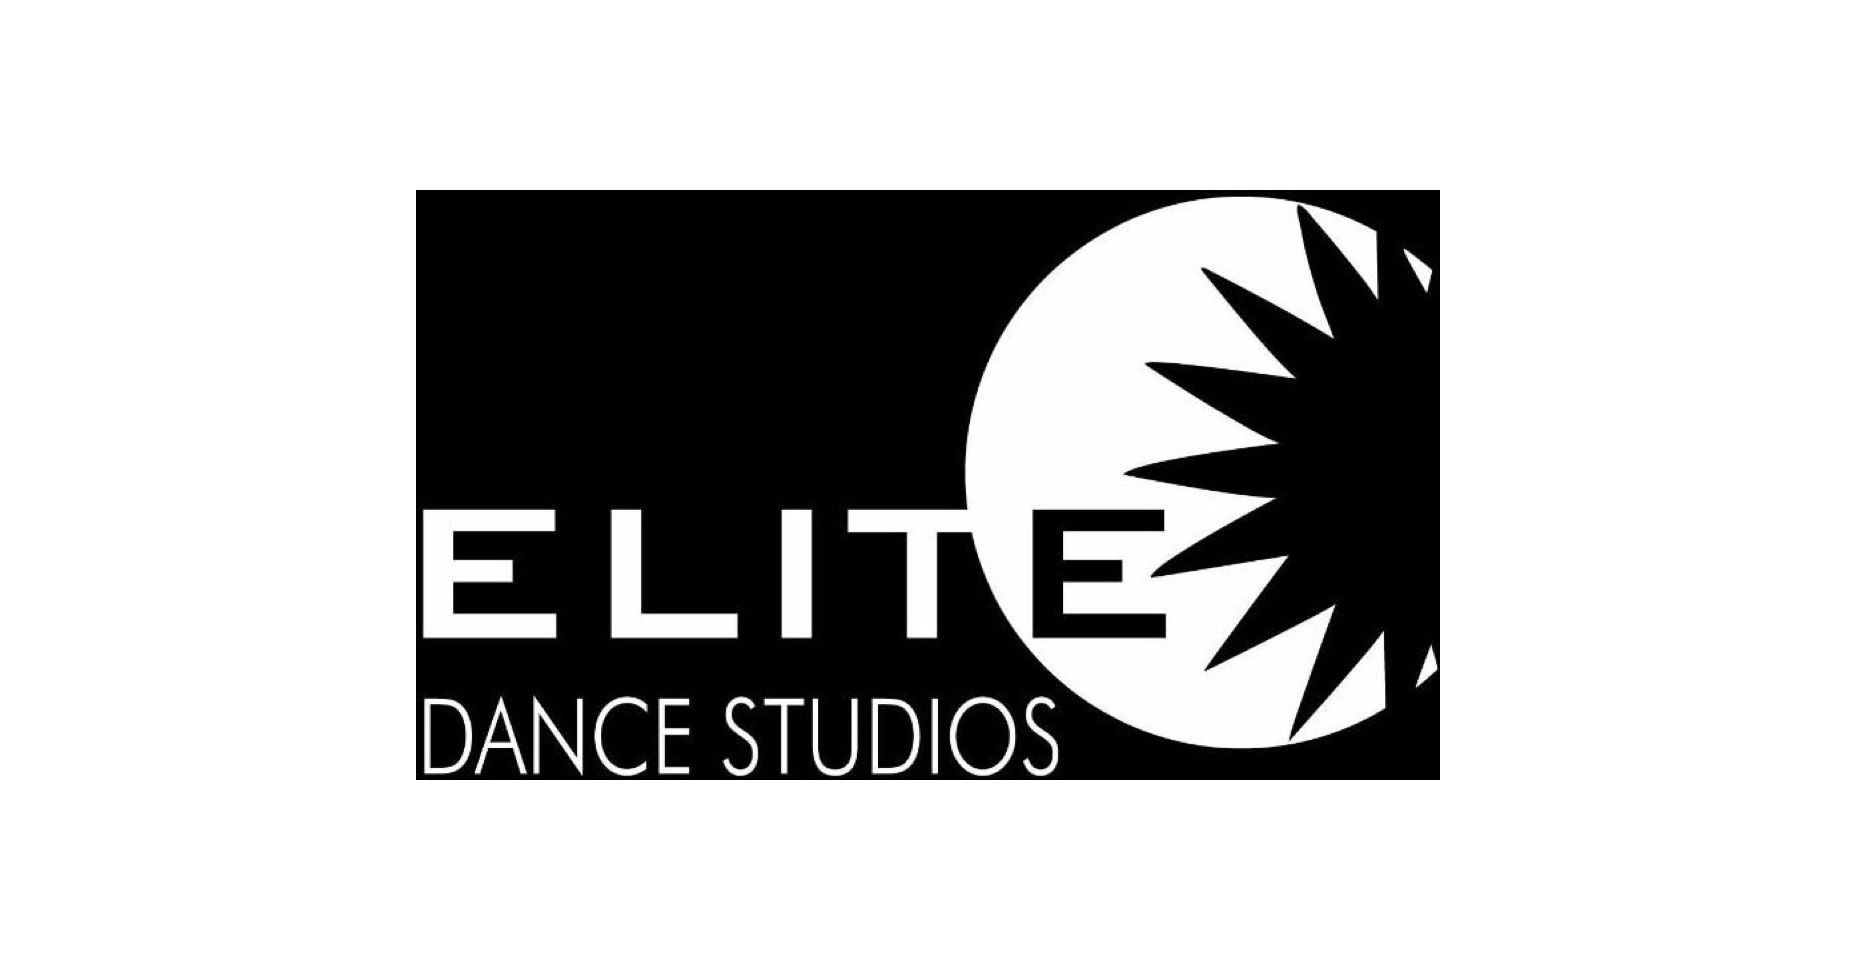 Professional Level Dance for Youth - ELITE Dance Studios